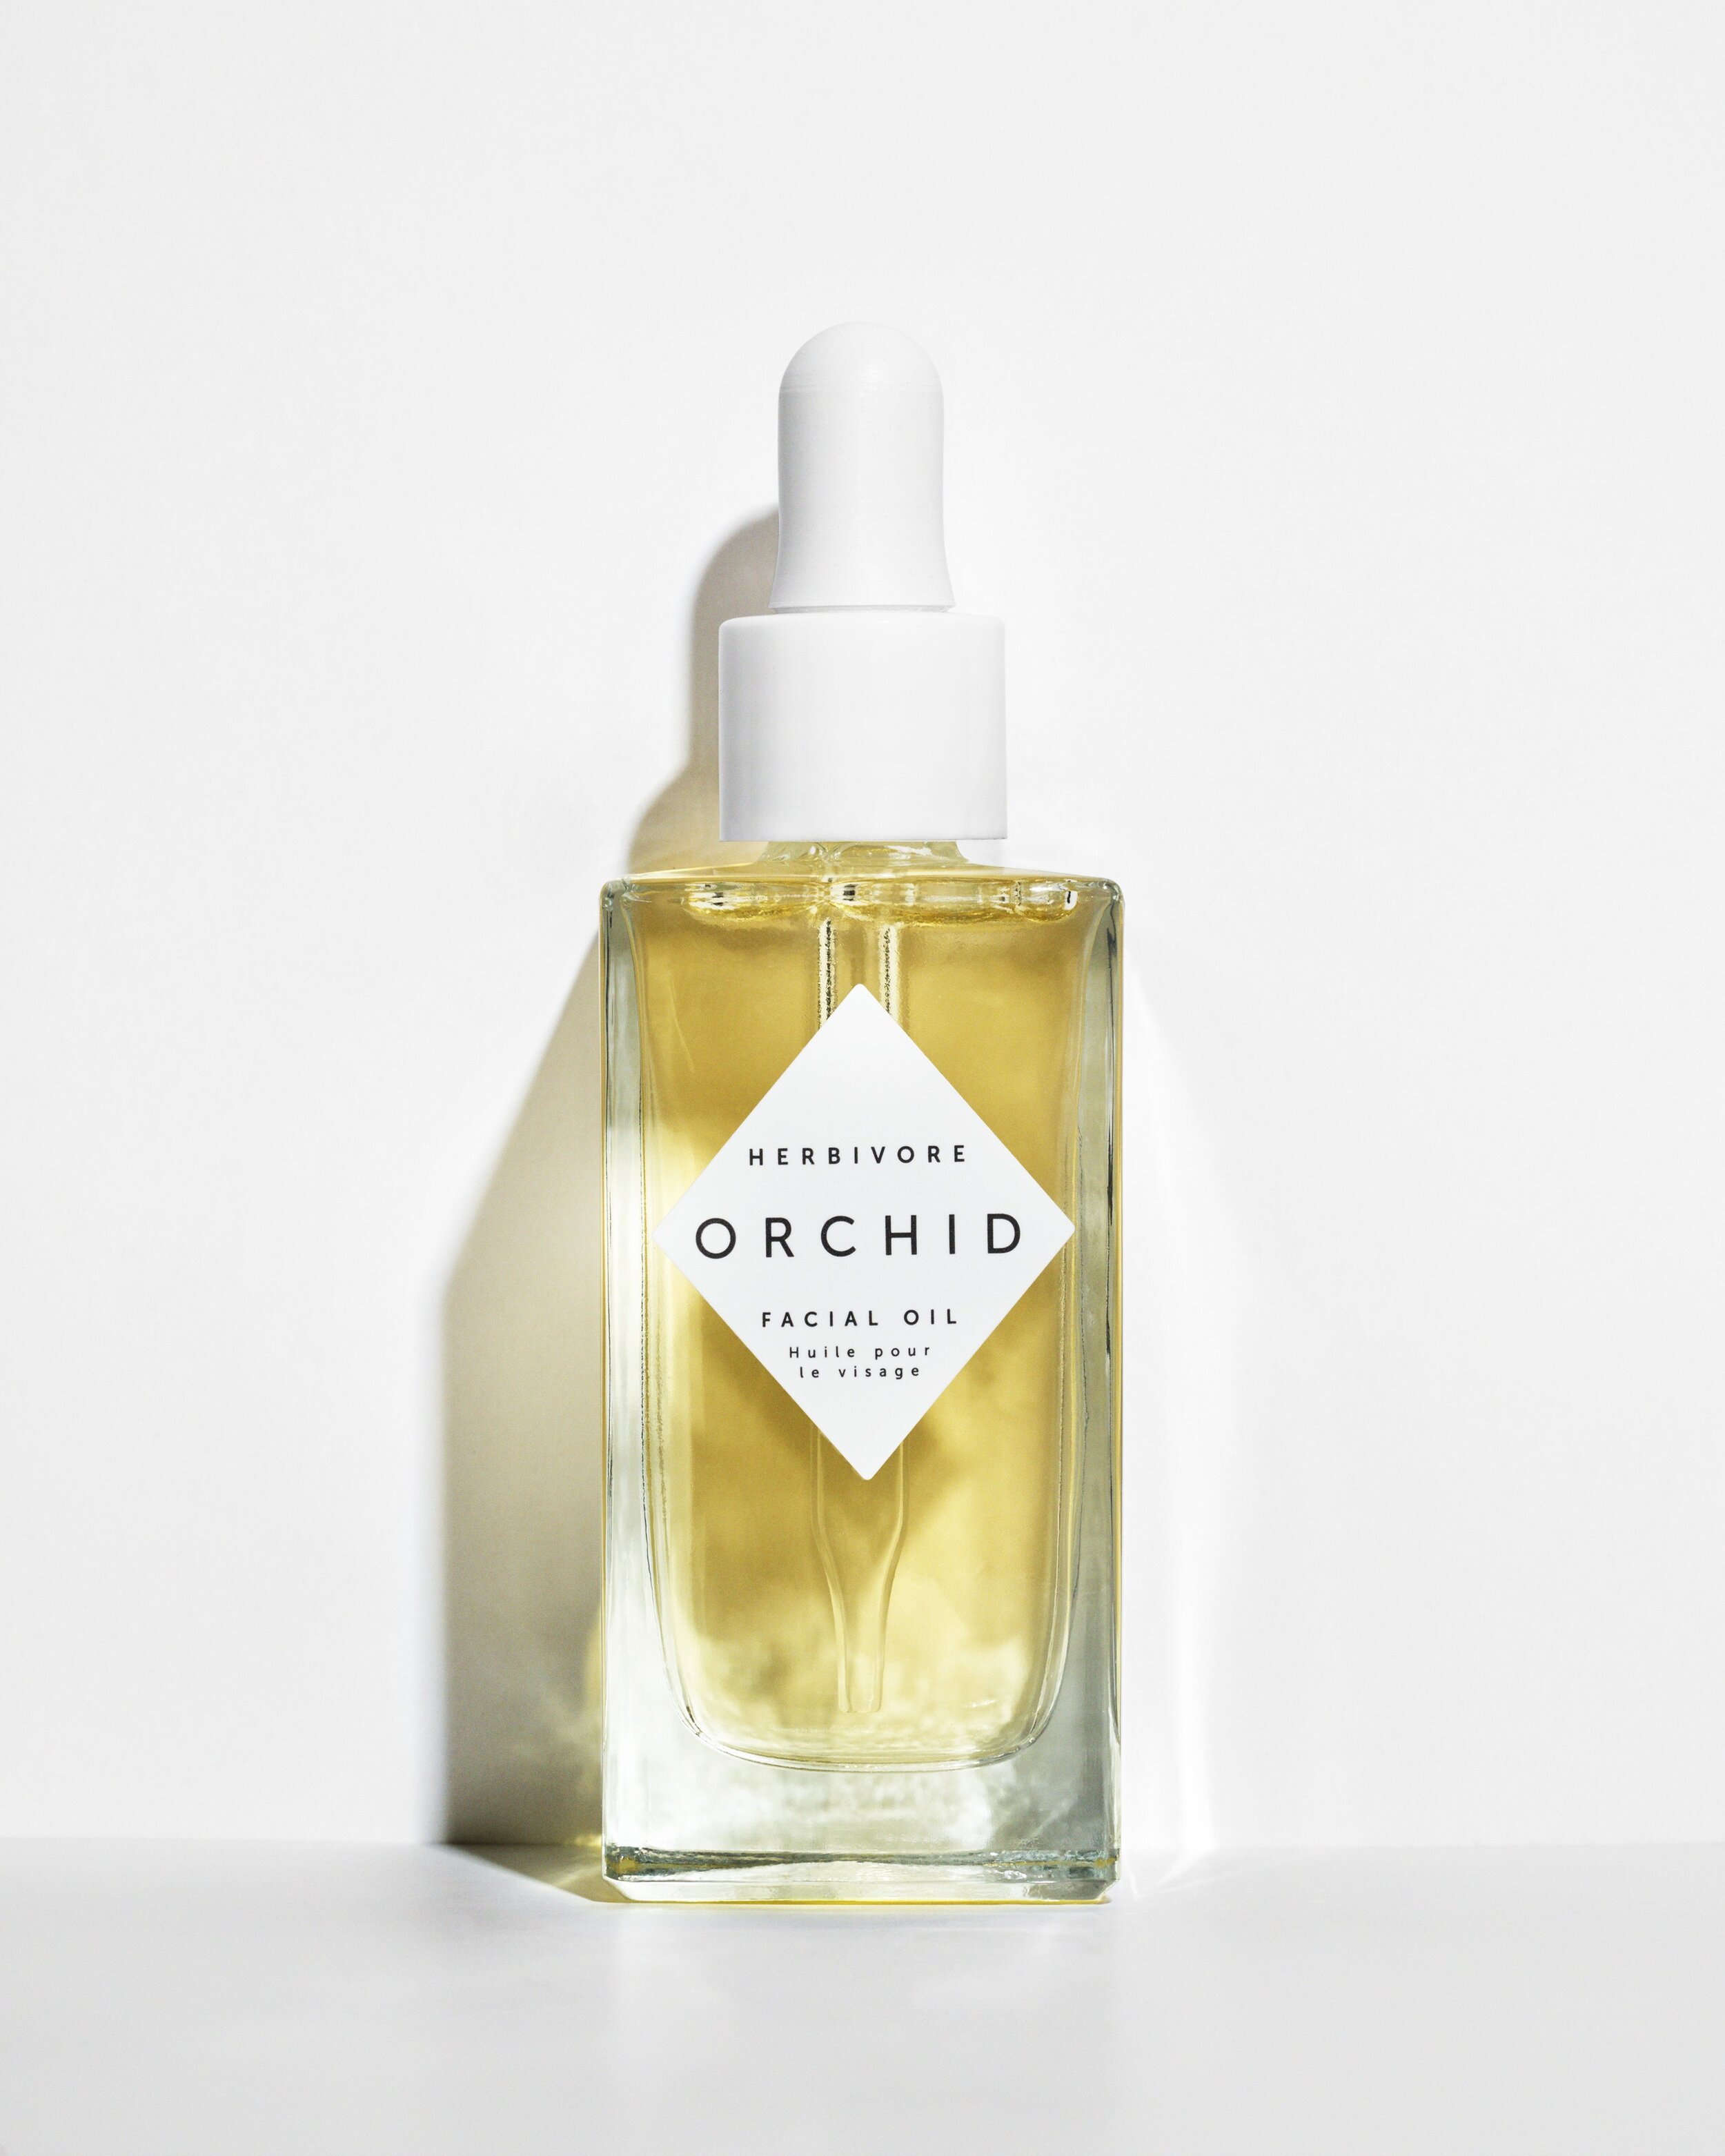 Herbivore Orchid Facial Oil - $64